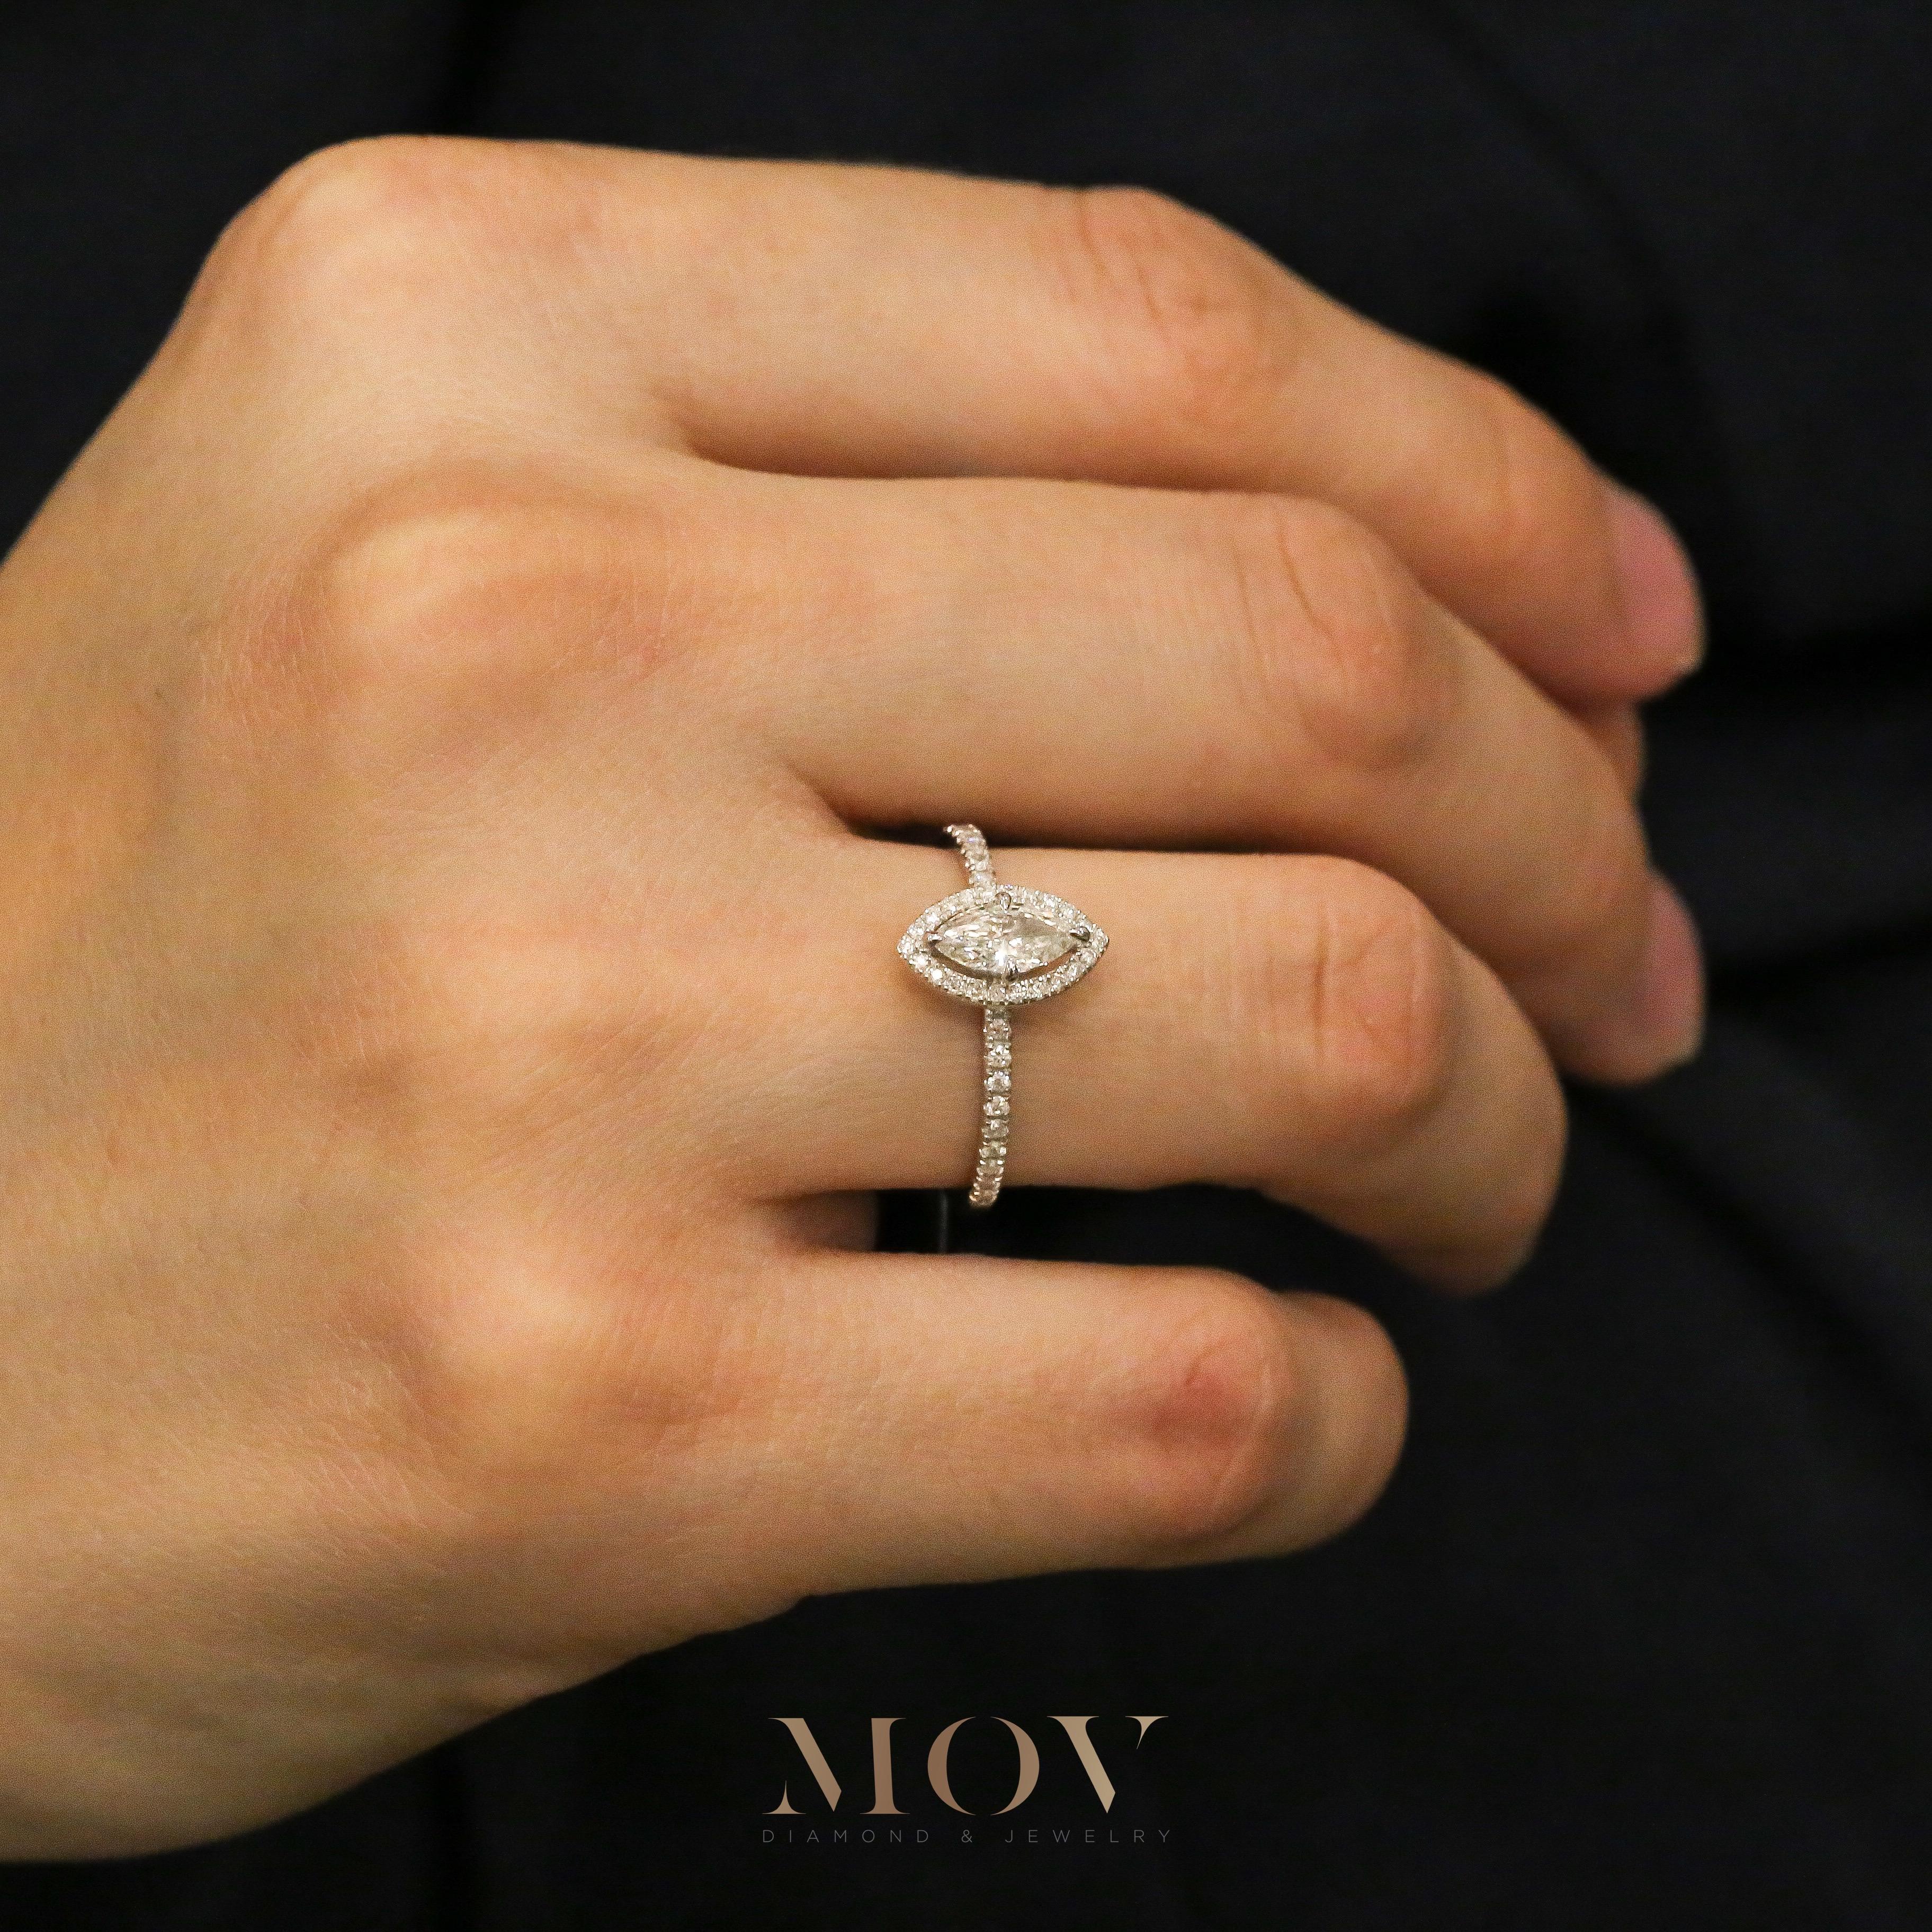 .25 carat marquise diamond ring